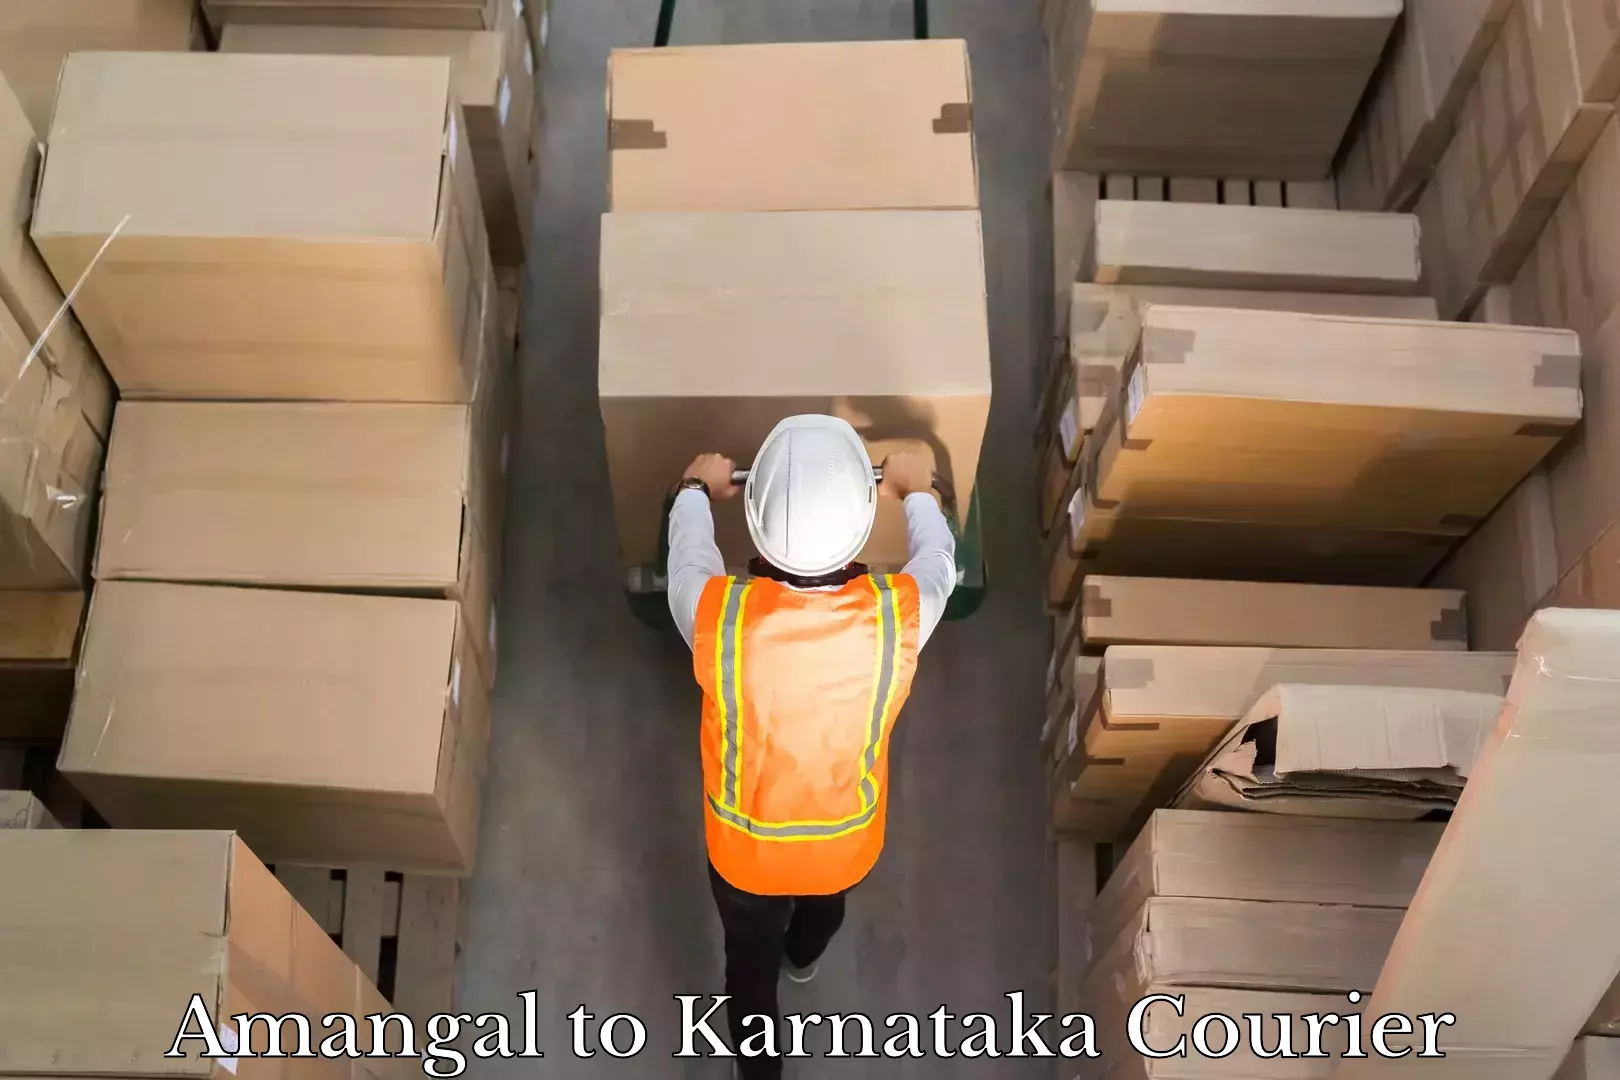 On-demand delivery Amangal to Karnataka